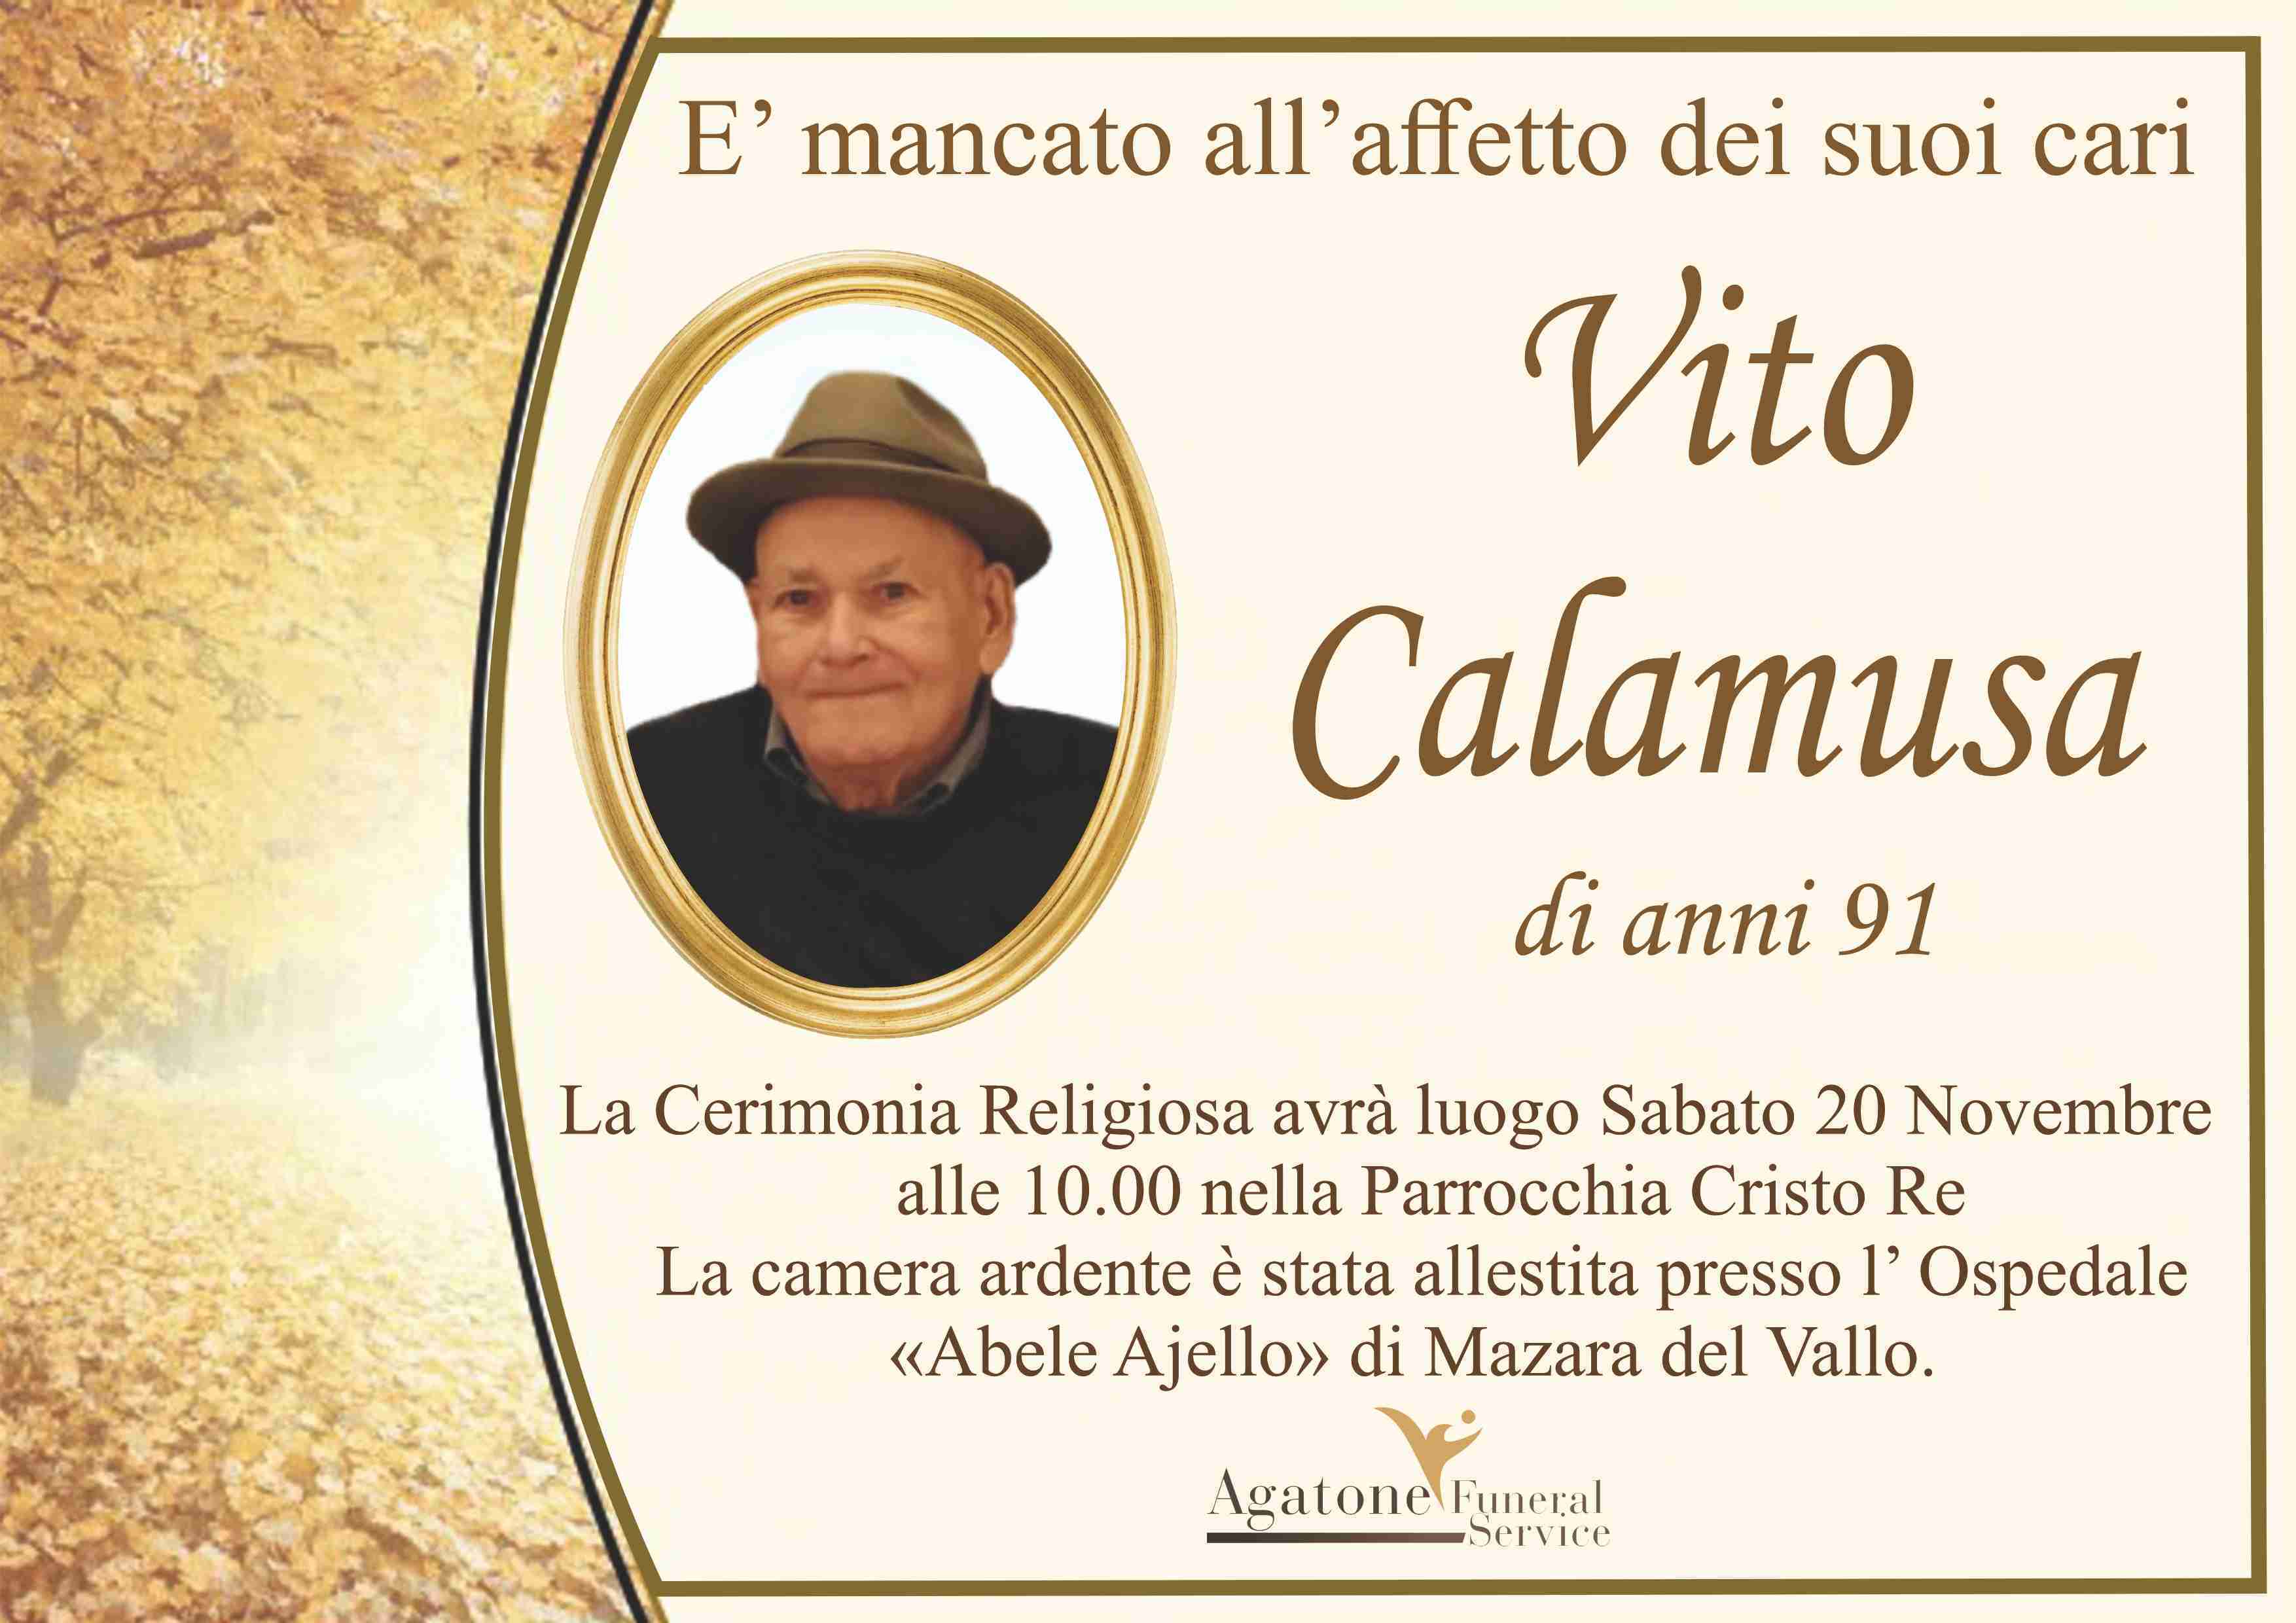 Vito Calamusa